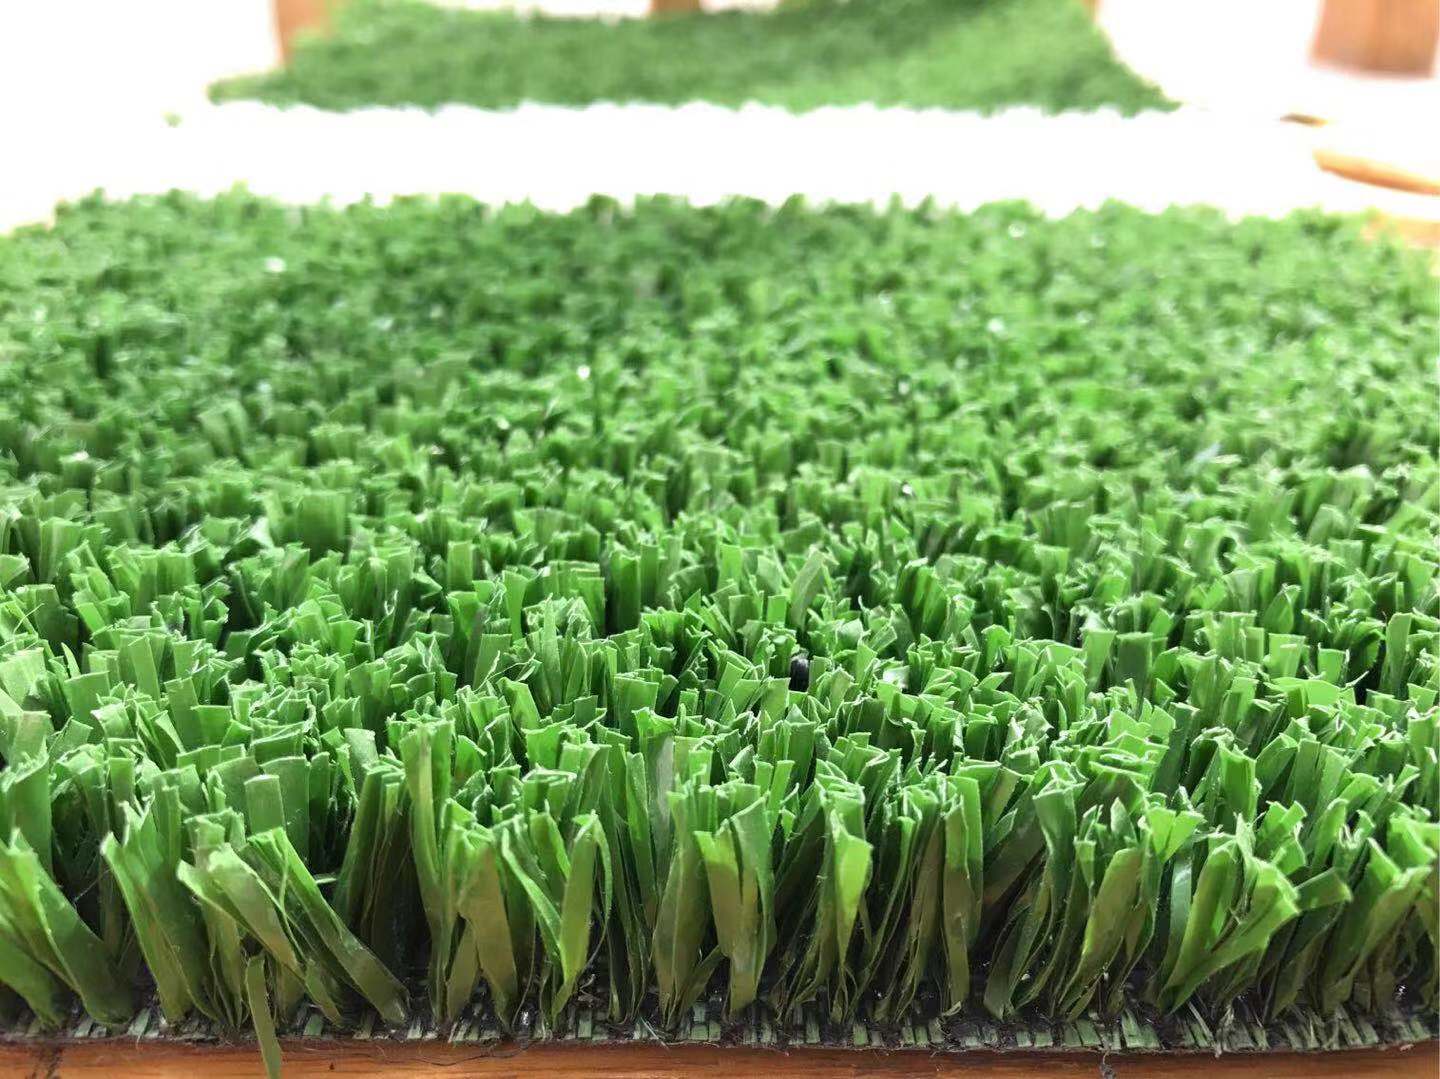 Artificial grass: a versatile solution for green spaces